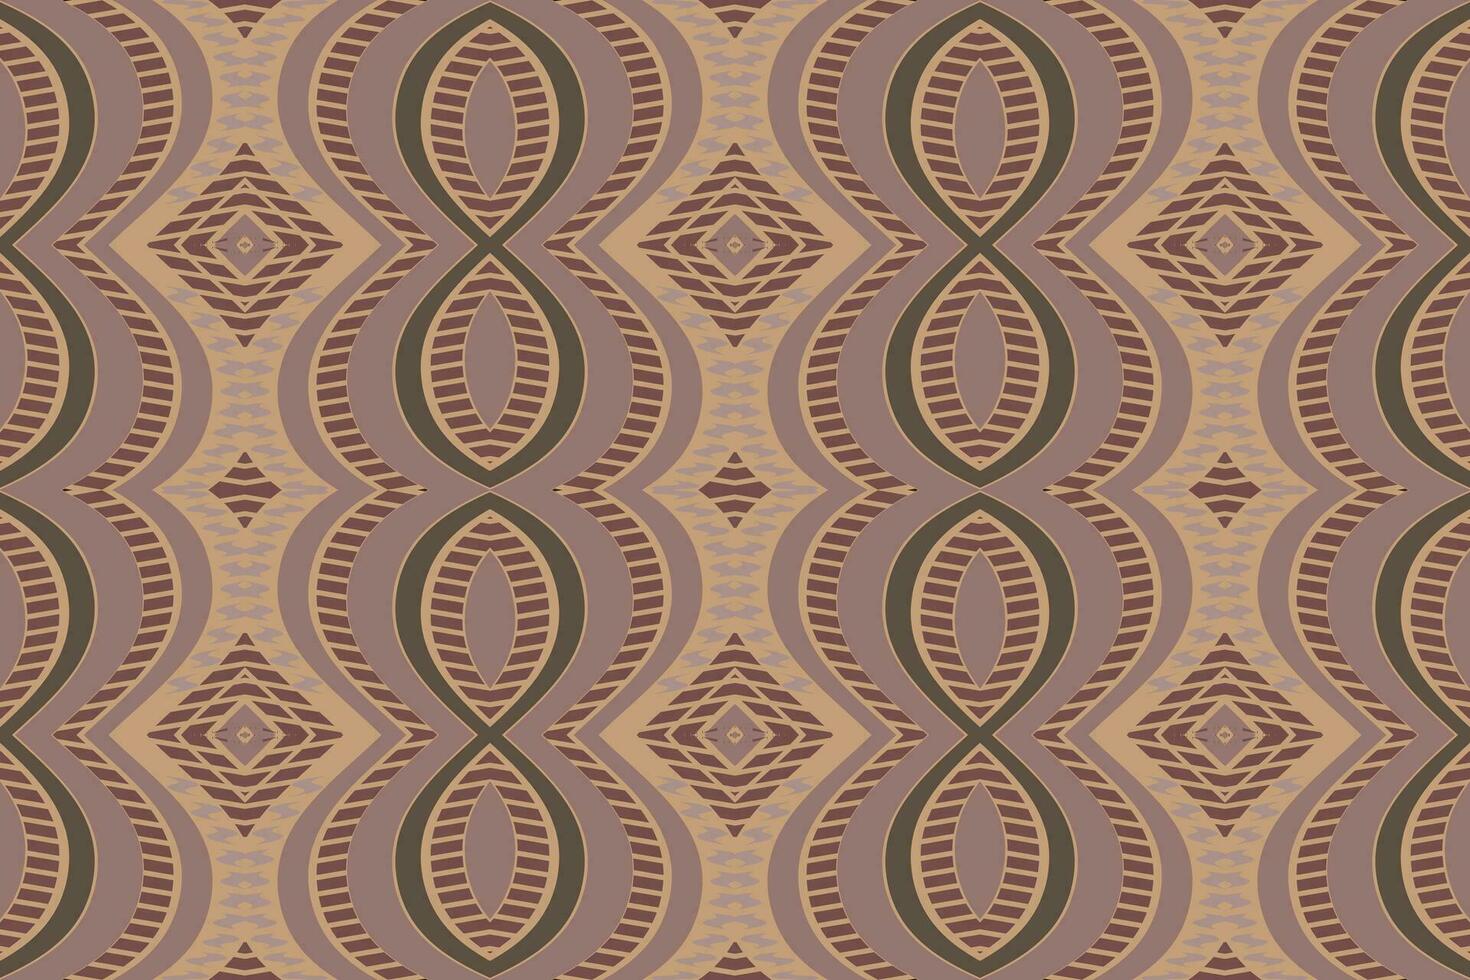 motiv ikat paisley broderi bakgrund. ikat sparre geometrisk etnisk orientalisk mönster traditionell.aztec stil abstrakt vektor illustration.design för textur, tyg, kläder, inslagning, sarong.